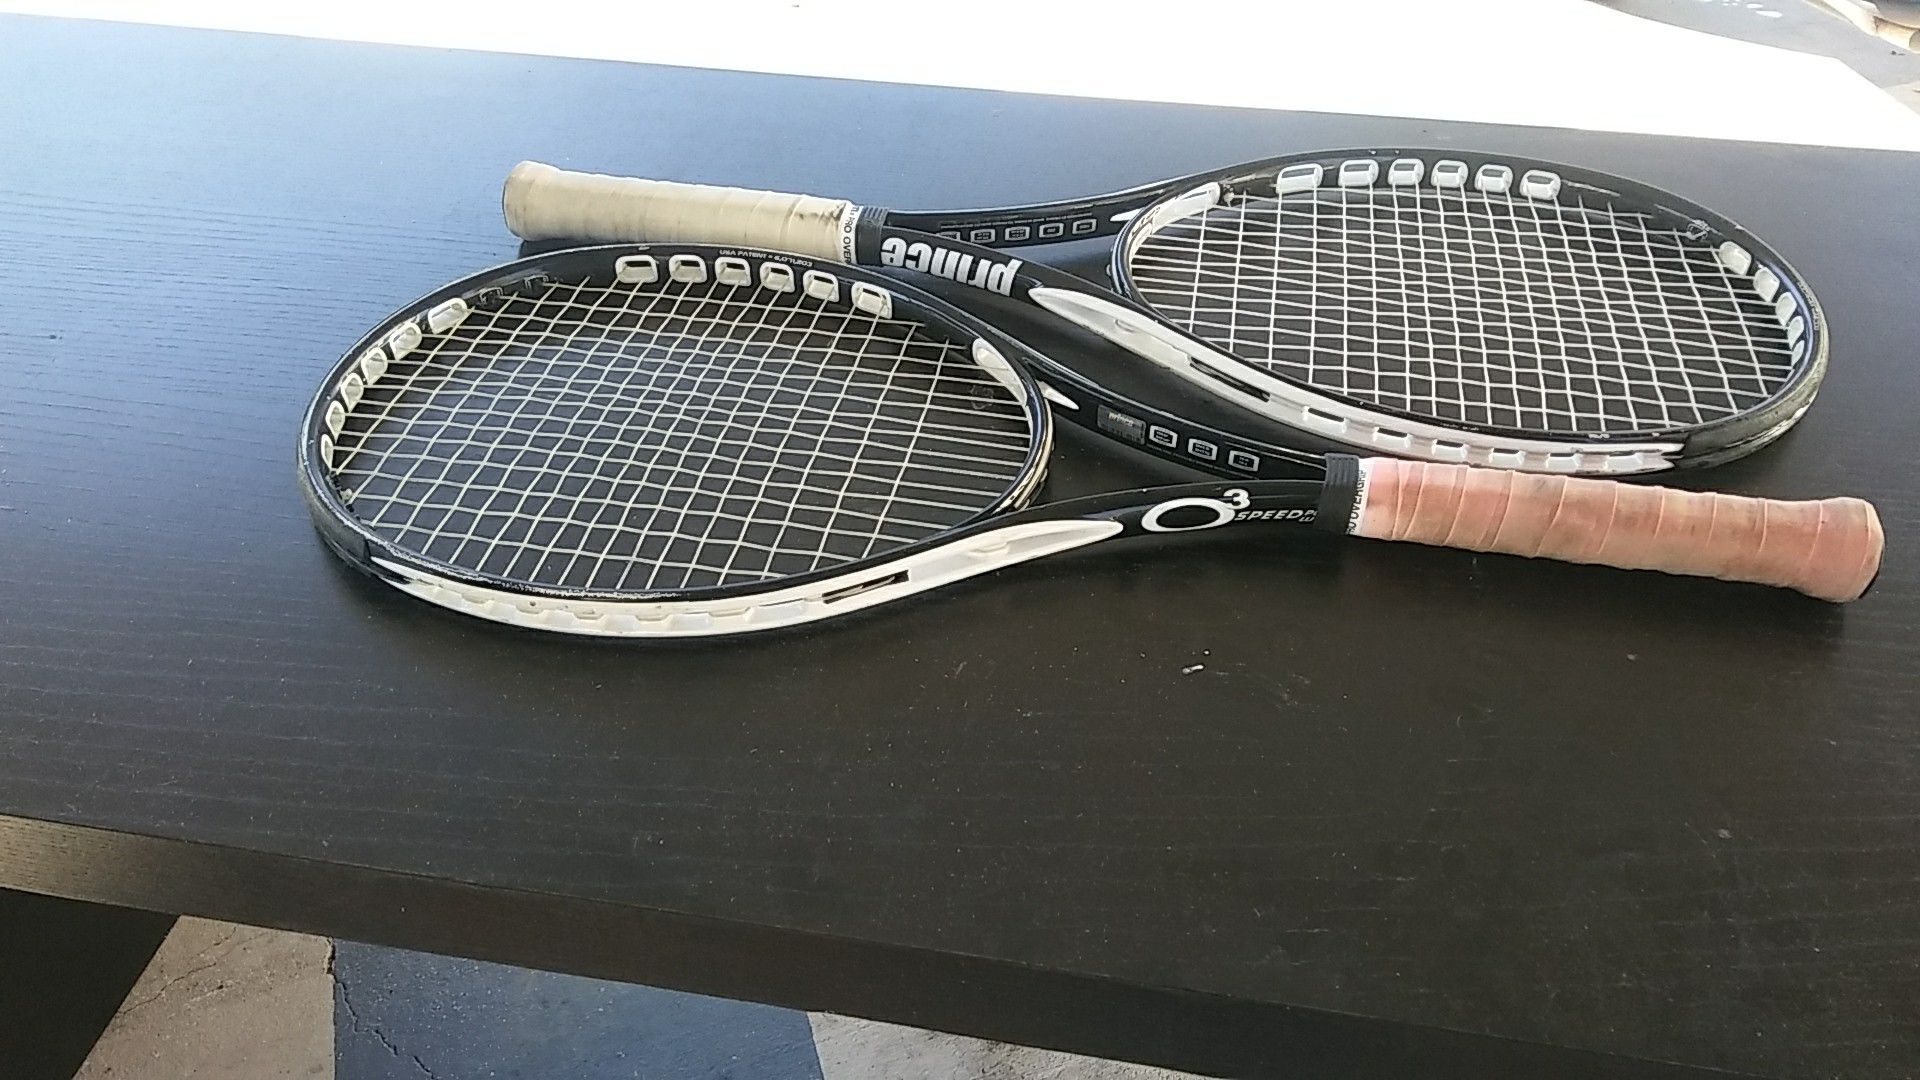 Wilson pro tennis rackets